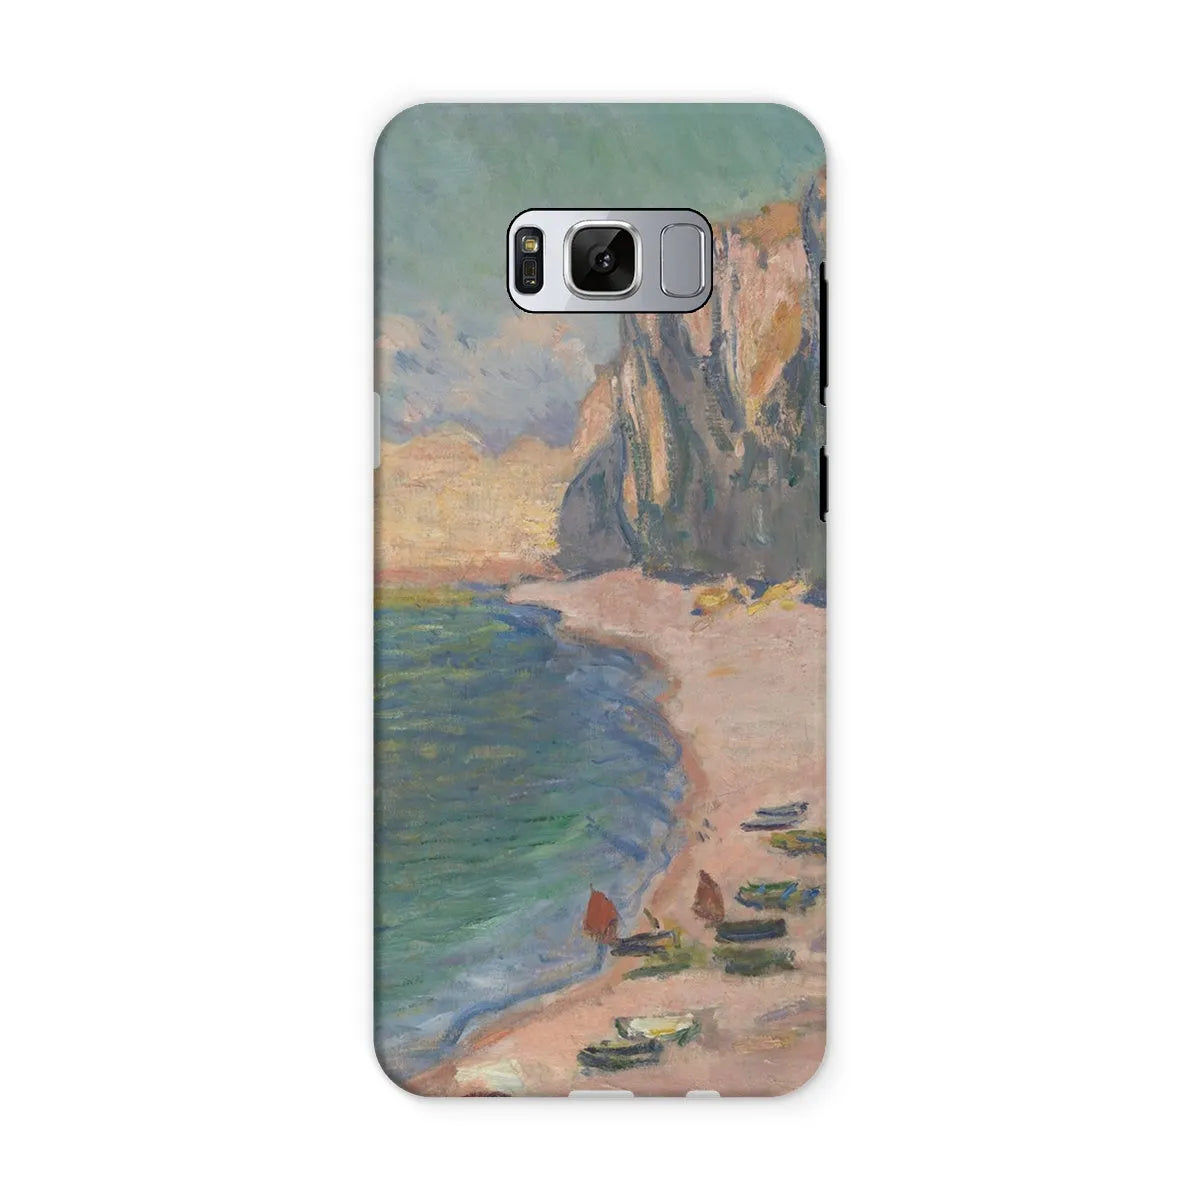 étretat - Impressionist Art Phone Case - Claude Monet - Samsung Galaxy S8 / Matte - Mobile Phone Cases - Aesthetic Art